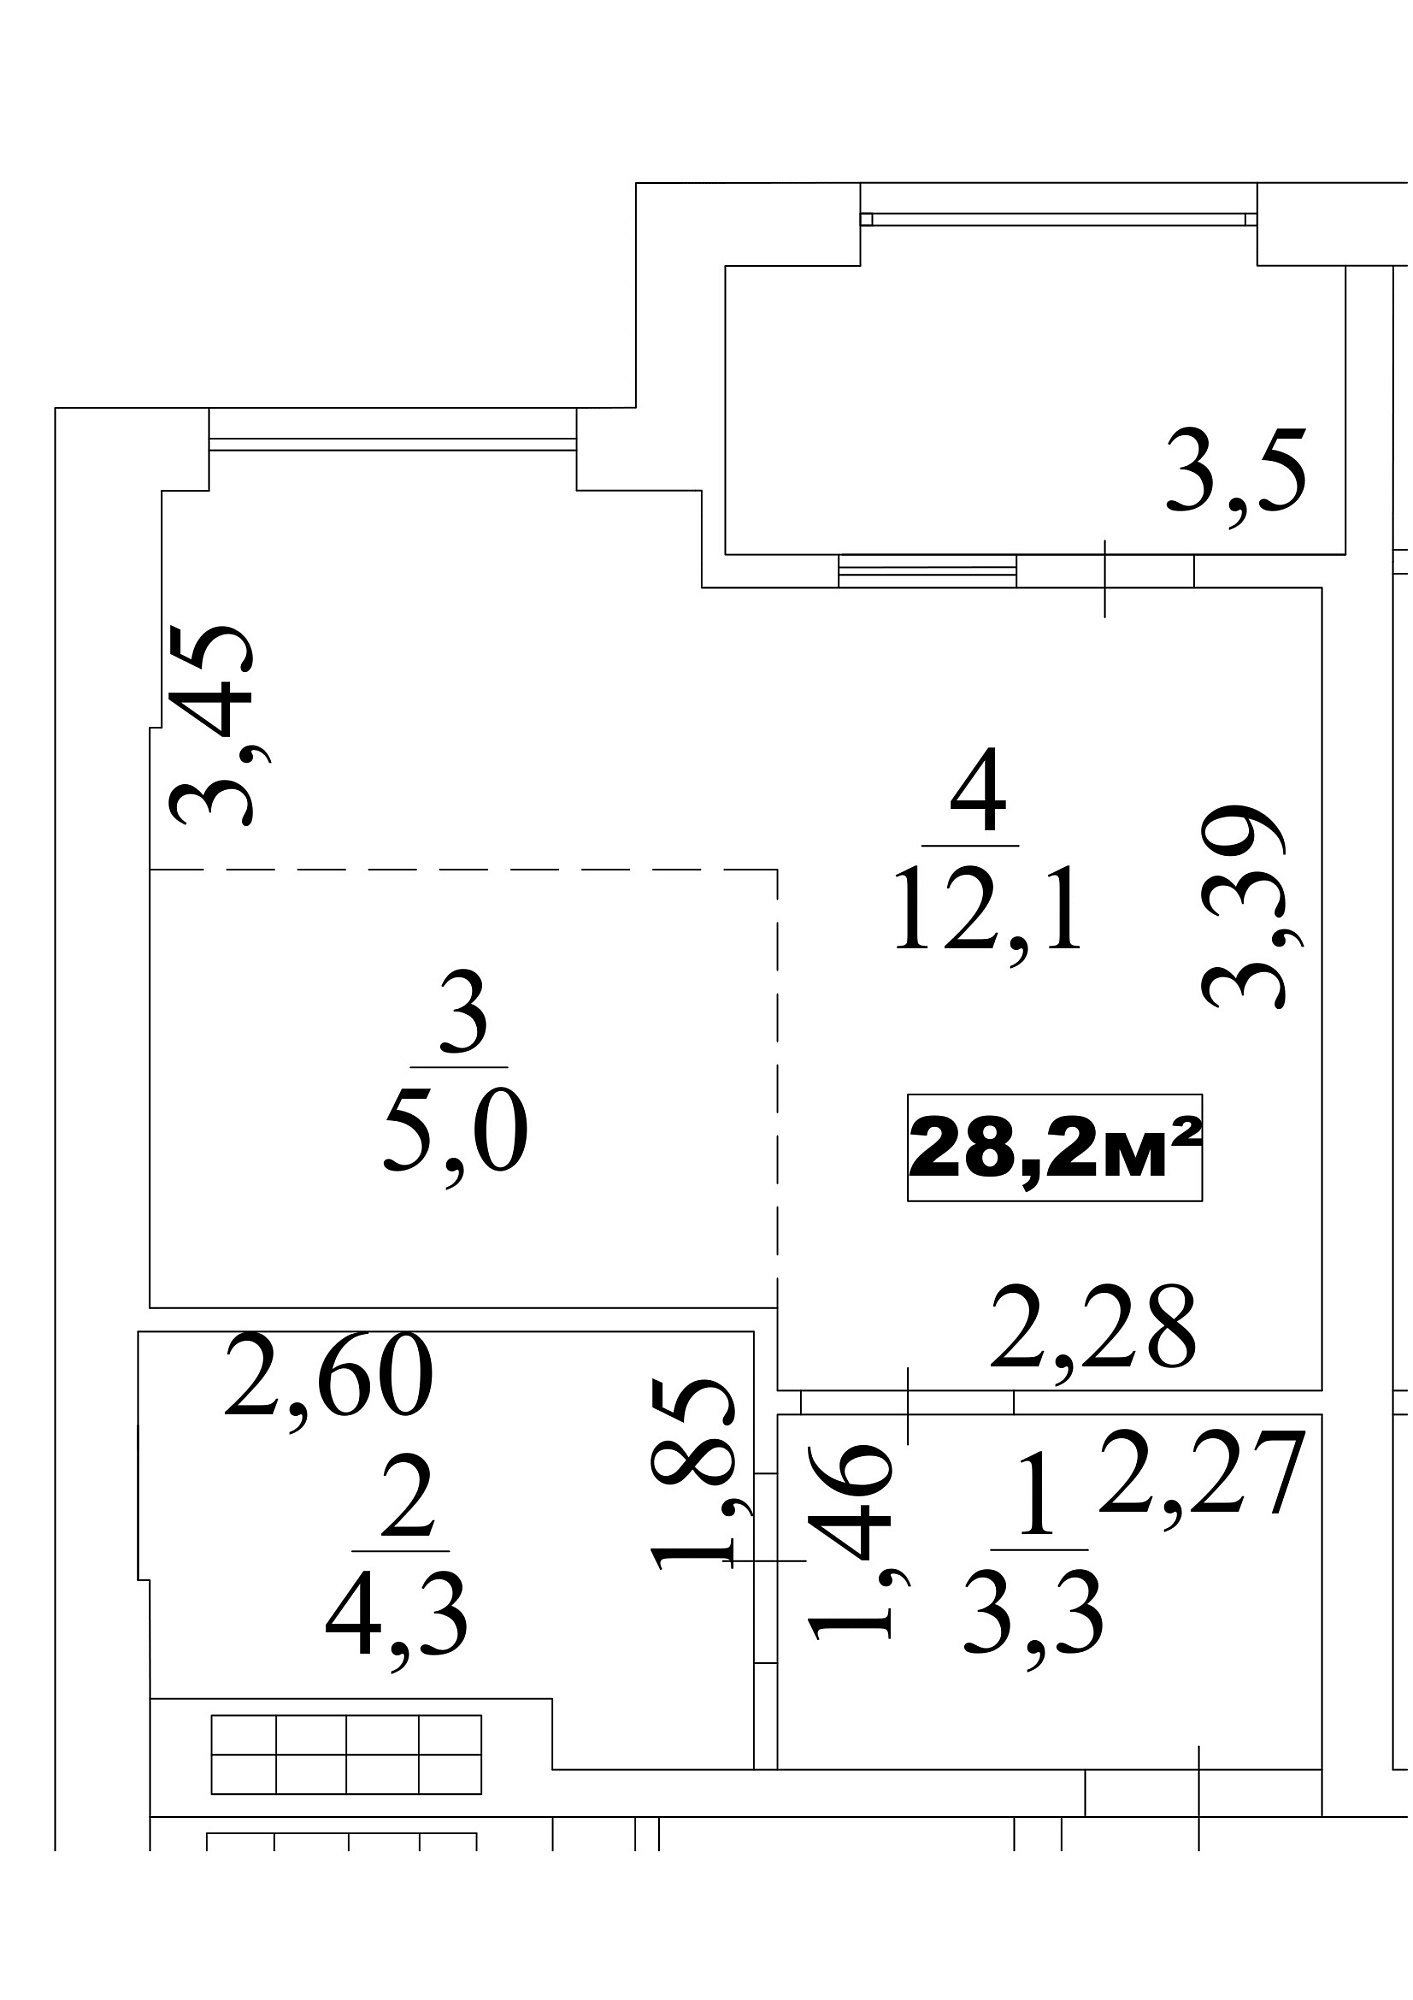 Planning Smart flats area 28.2m2, AB-10-09/0075б.